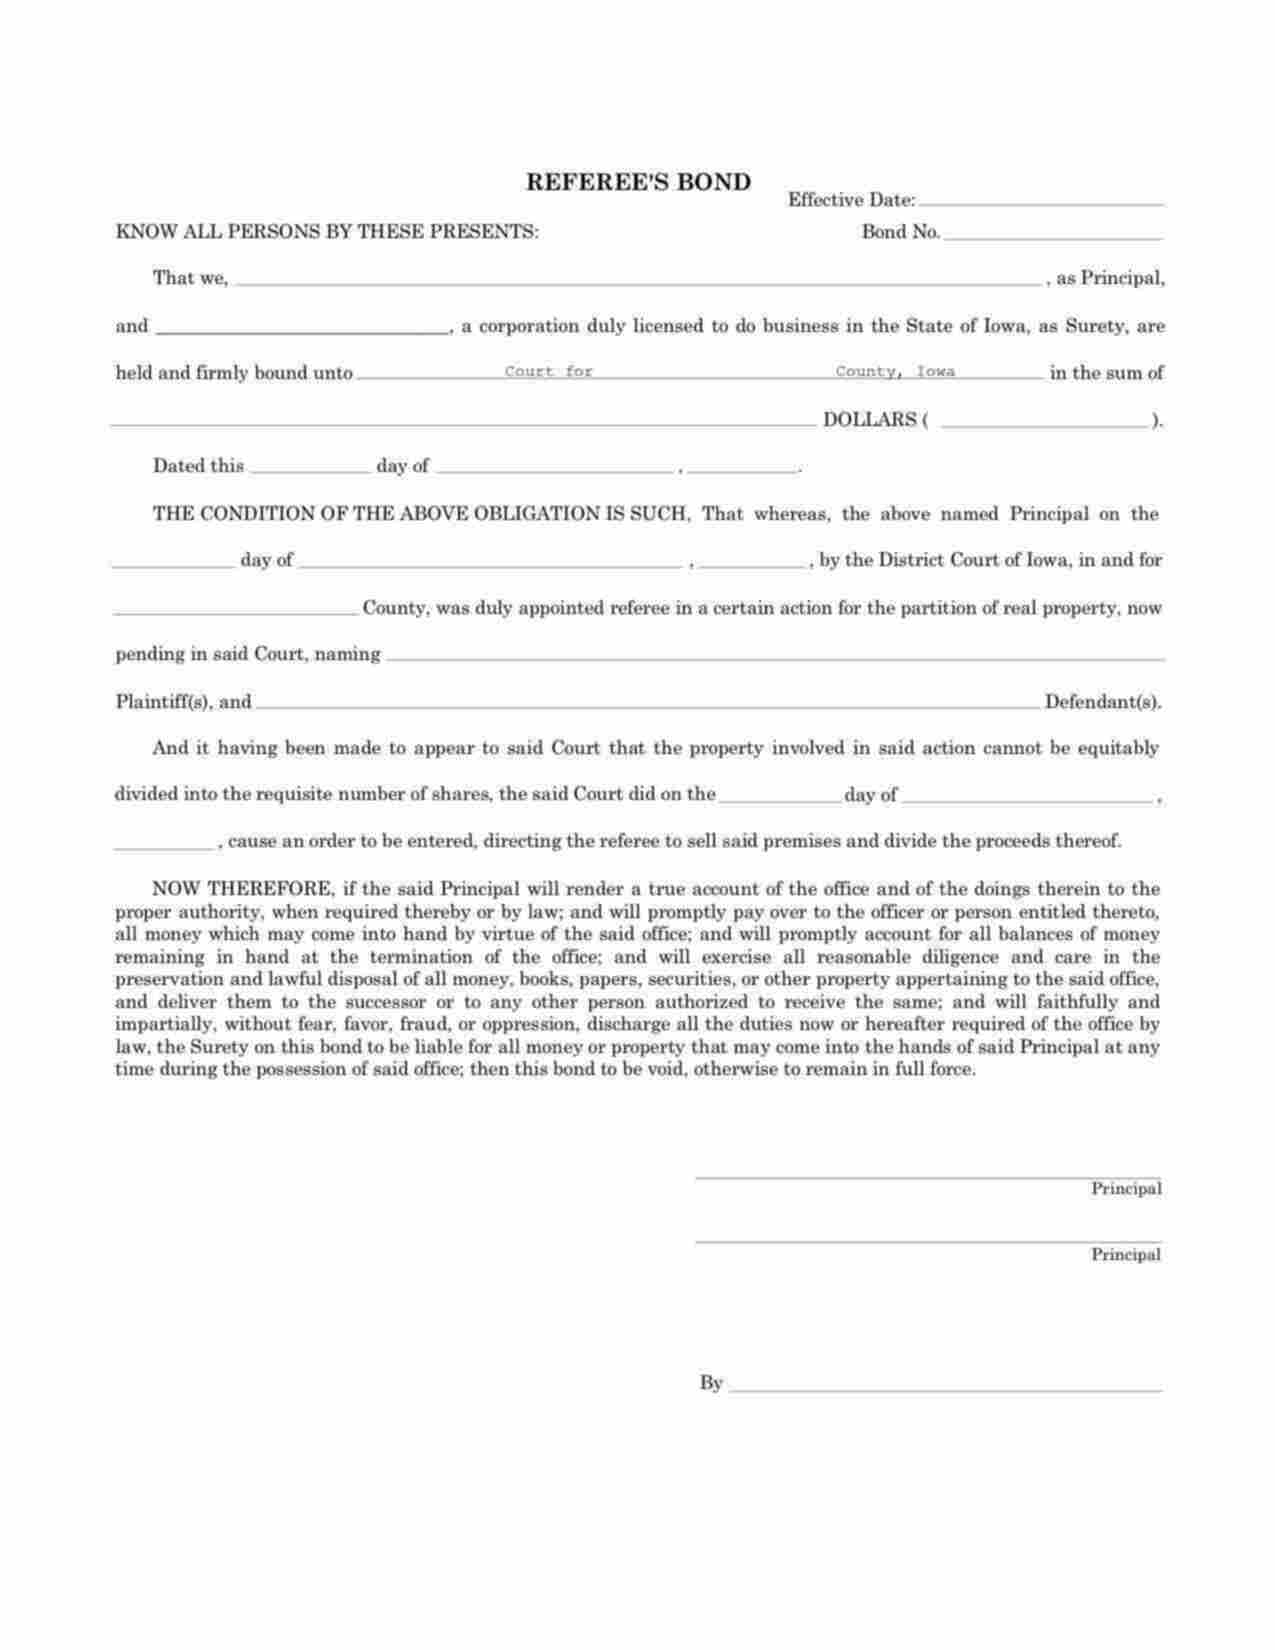 Iowa Referee Bond Form